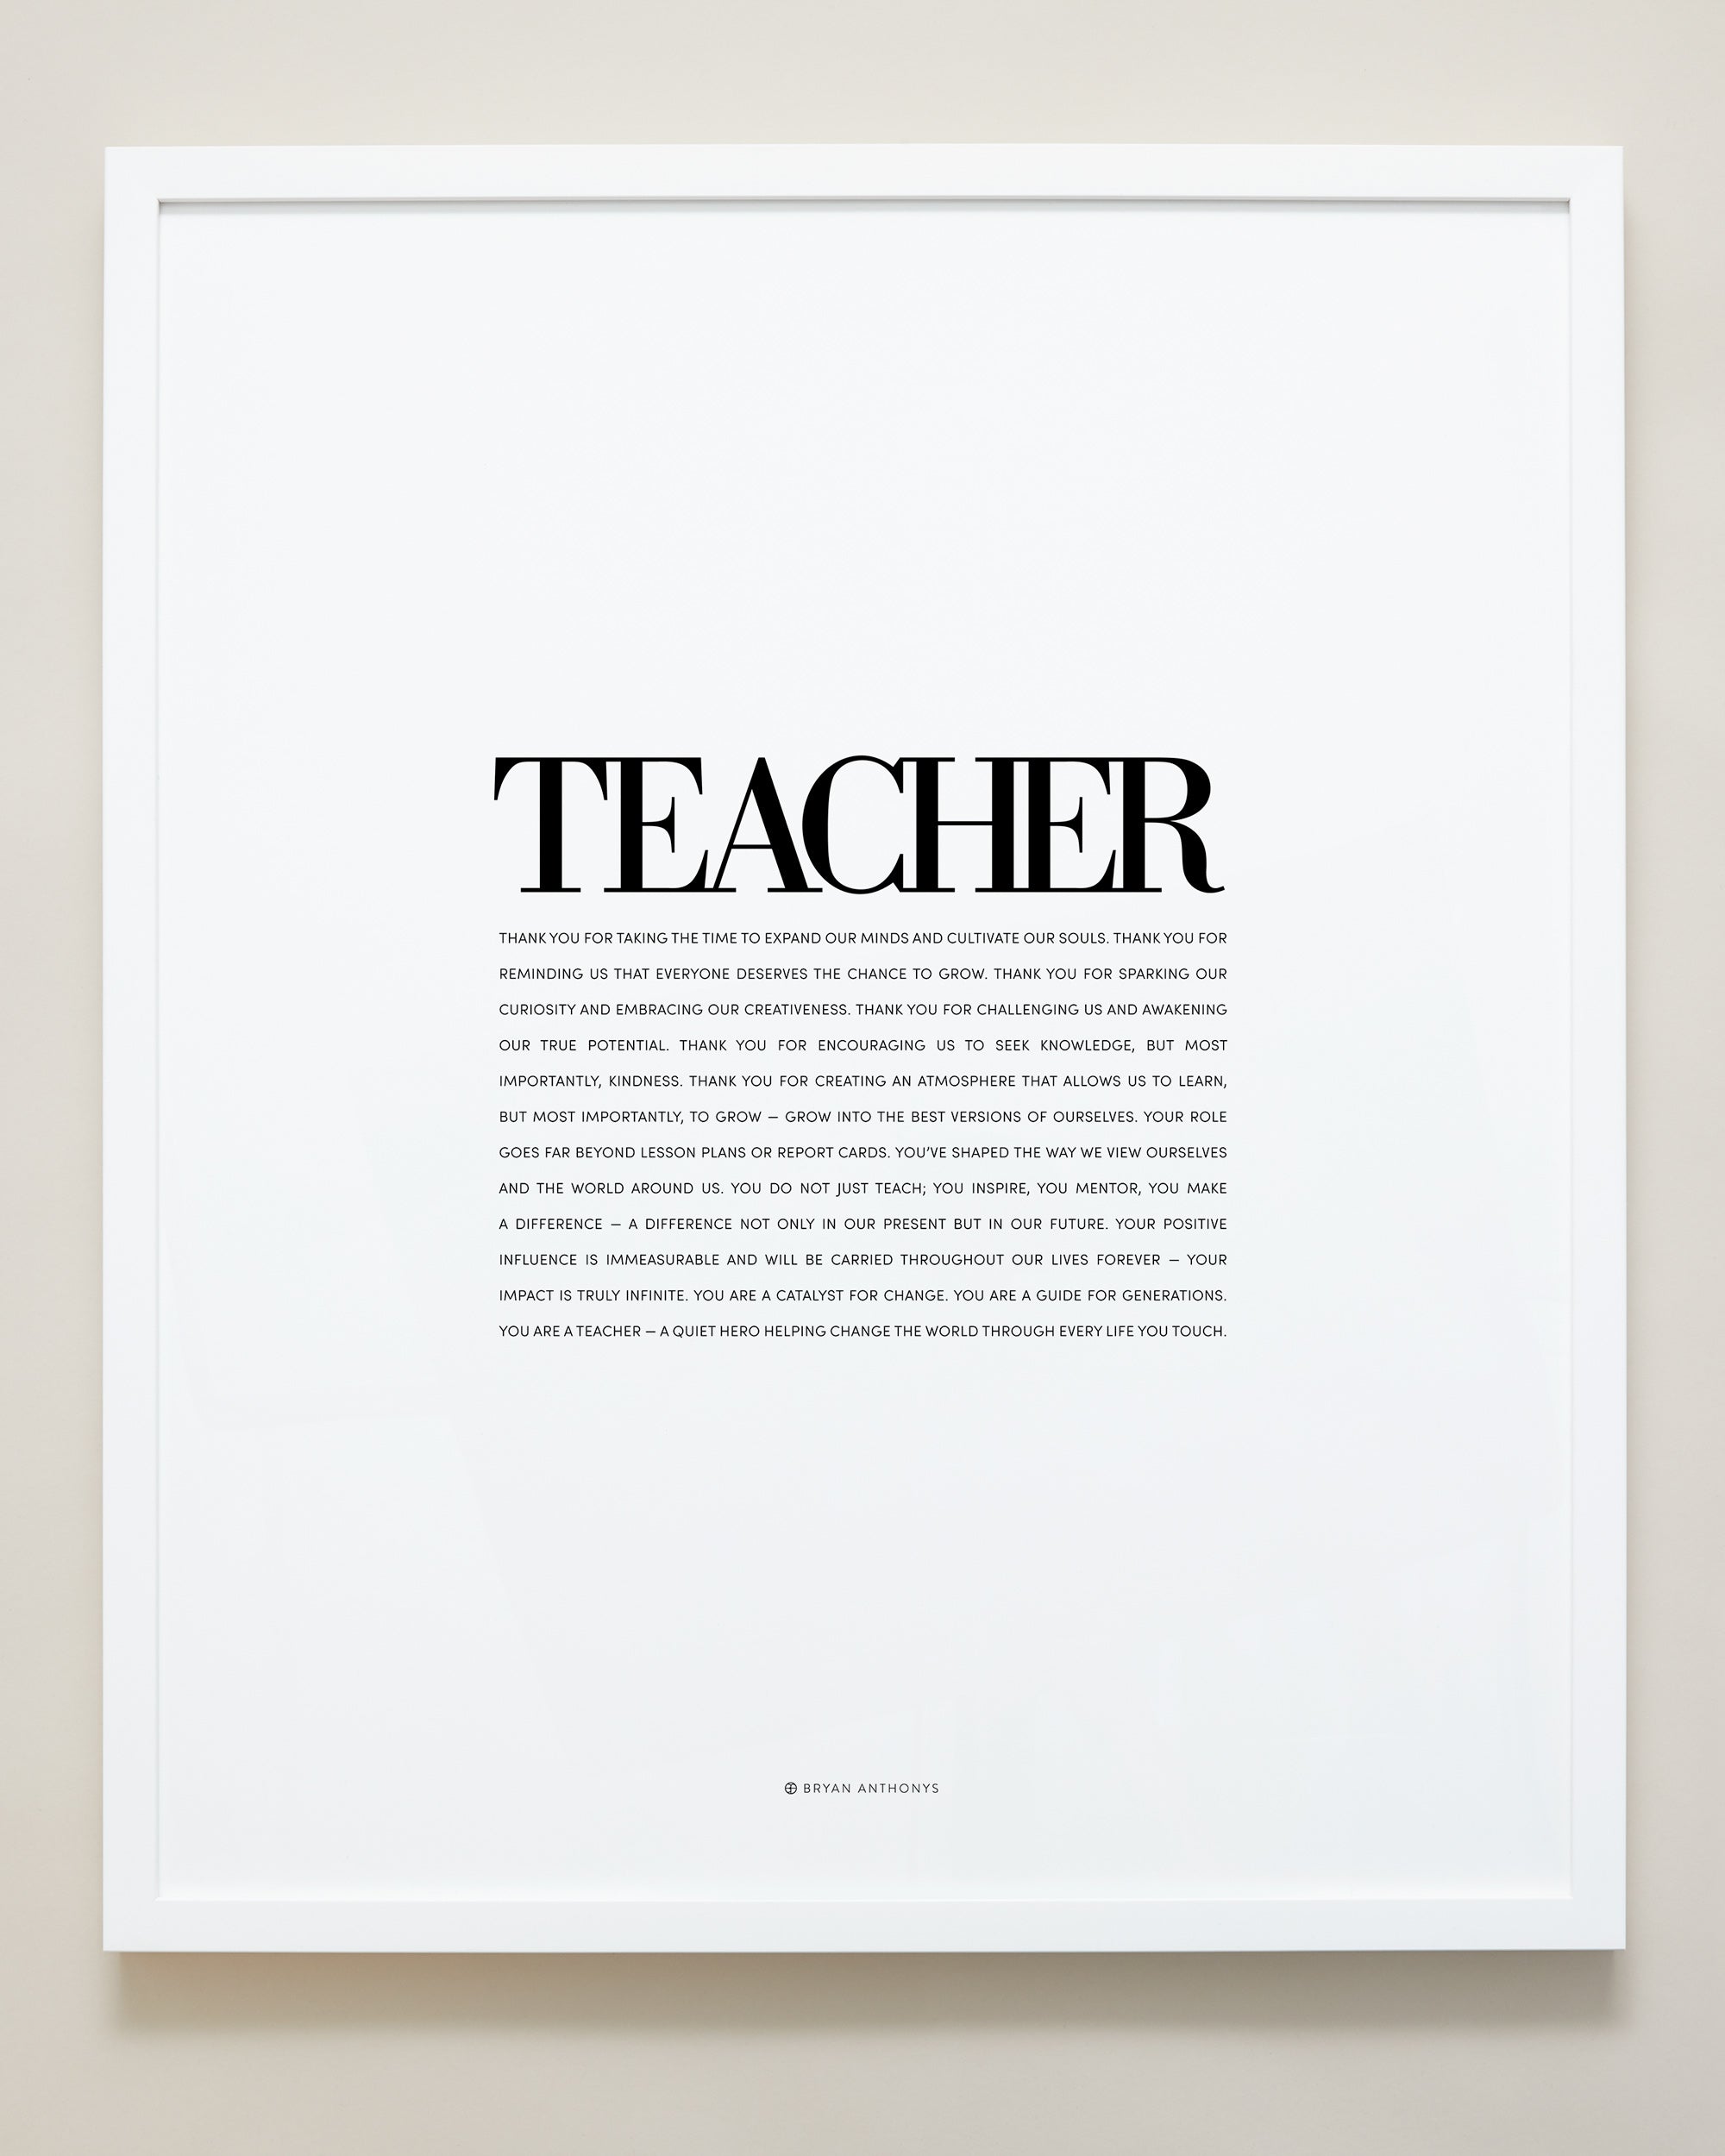 Bryan Anthonys Home Decor Purposeful Prints Teacher Editorial Framed Print White 20x24